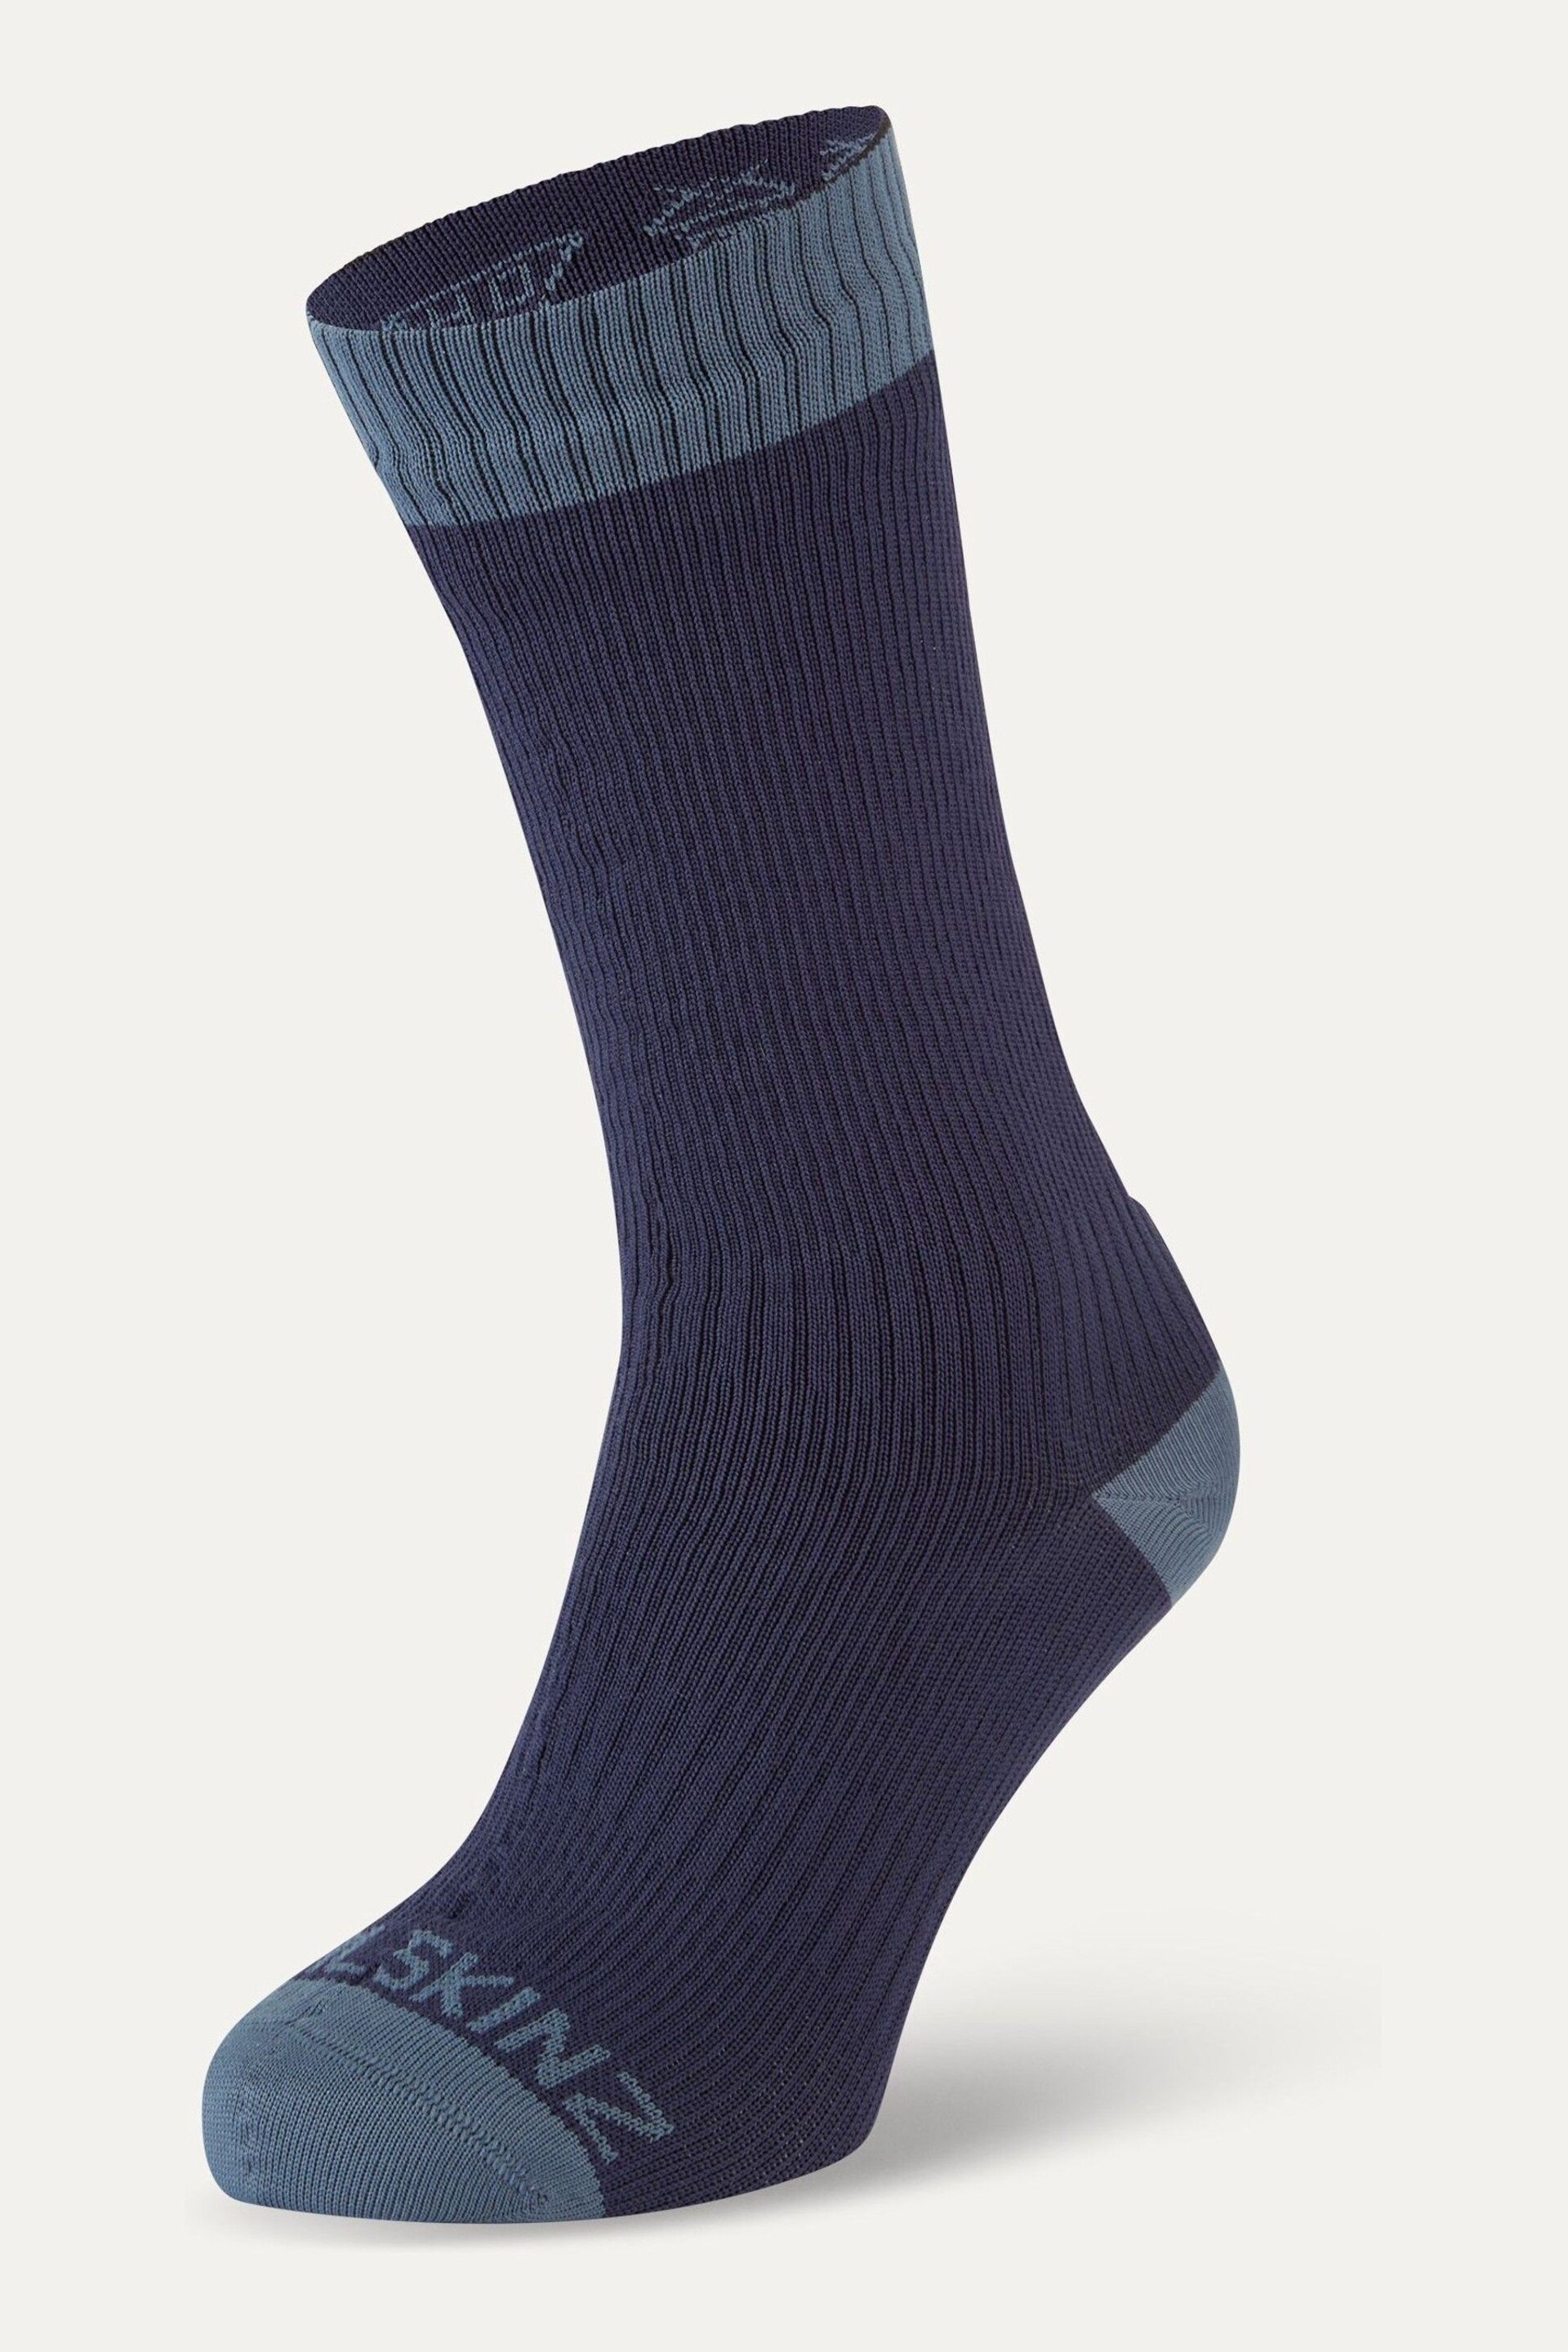 Sealskinz Wiveton Waterproof Warm Weather Mid Length Black Socks - Image 1 of 2